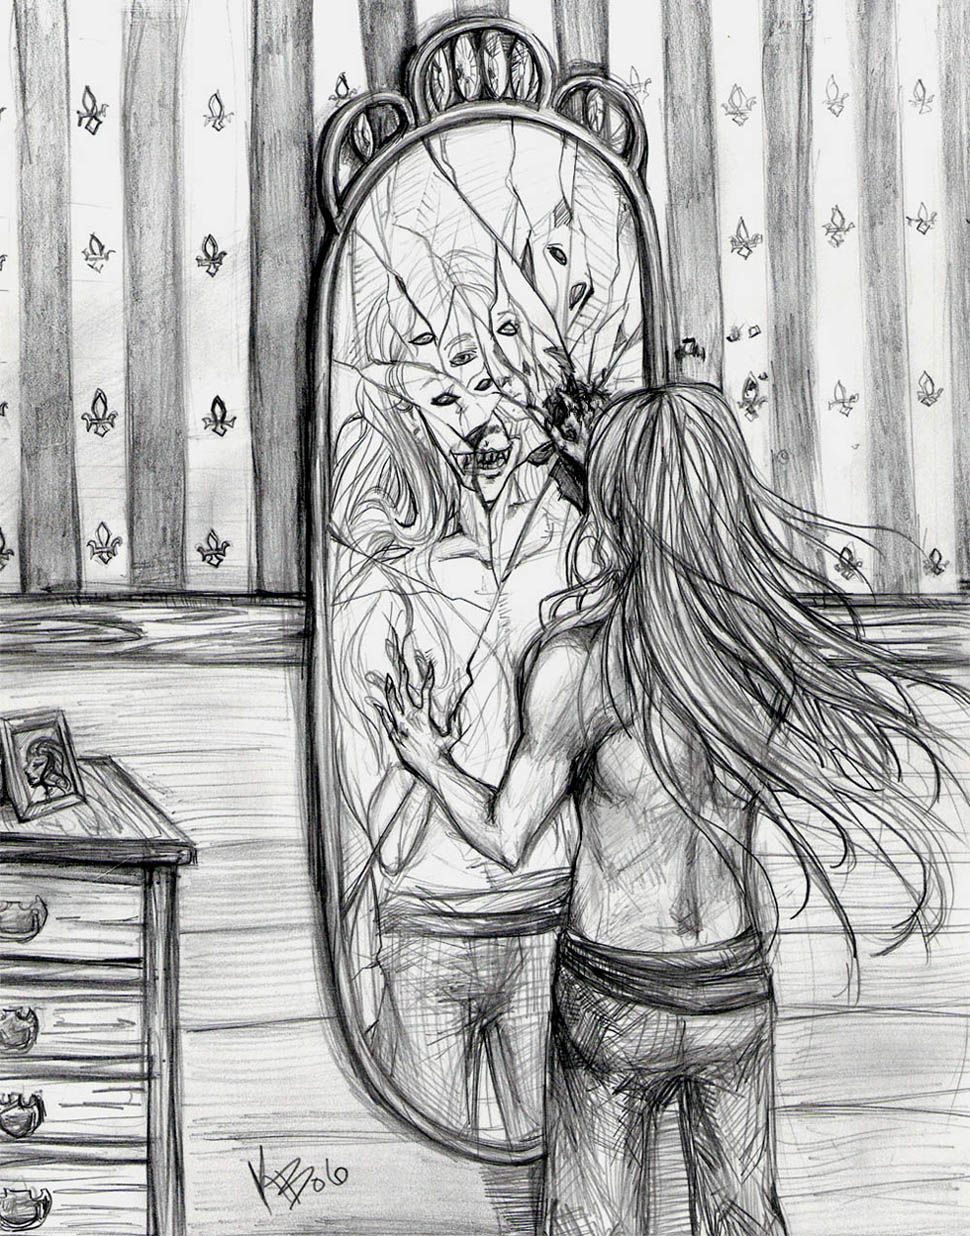 Broken Mirror Reflection Drawing at PaintingValley.com | Explore